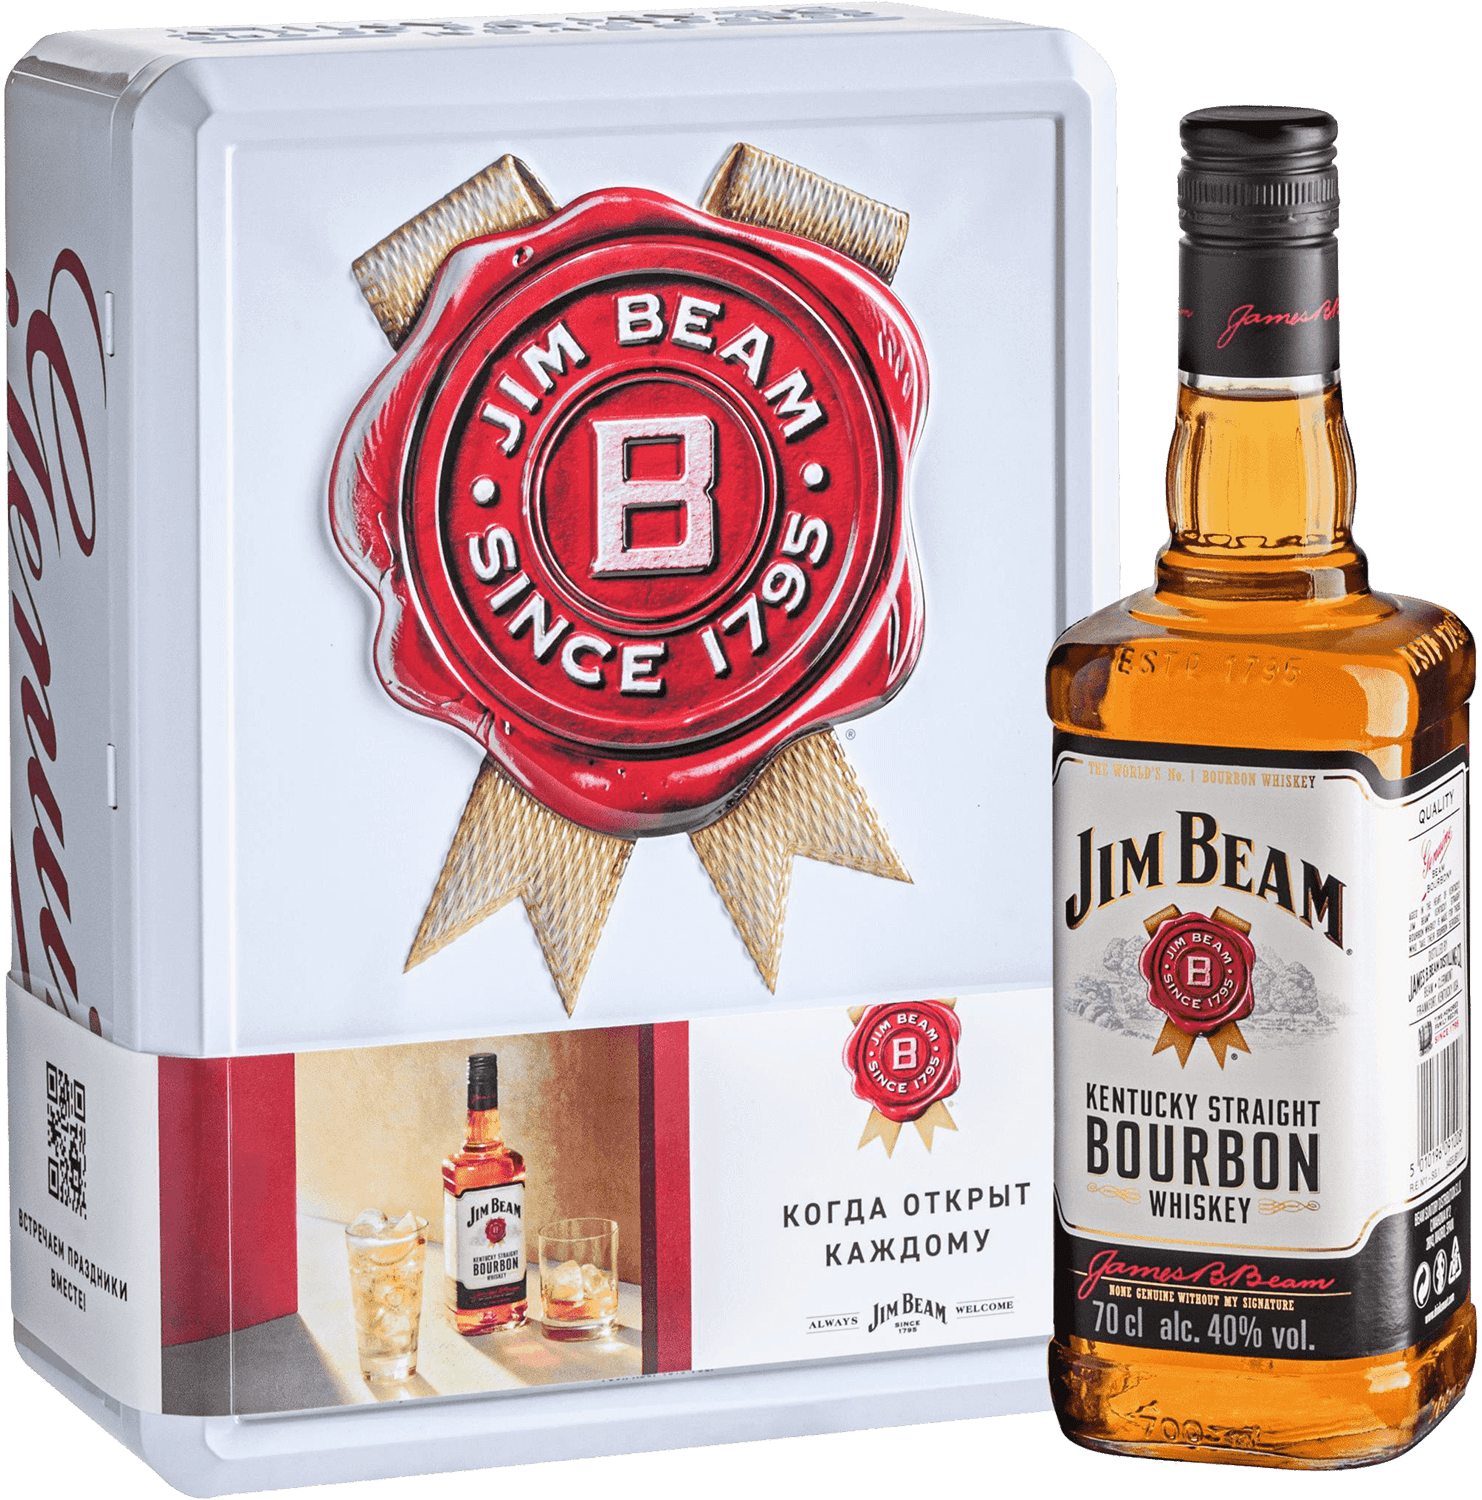 Jim Beam Kentucky Straight Bourbon Whiskey (gift box with 2 glasses) lambay small batch blend irish whiskey 4 y o gift box with 2 glasses